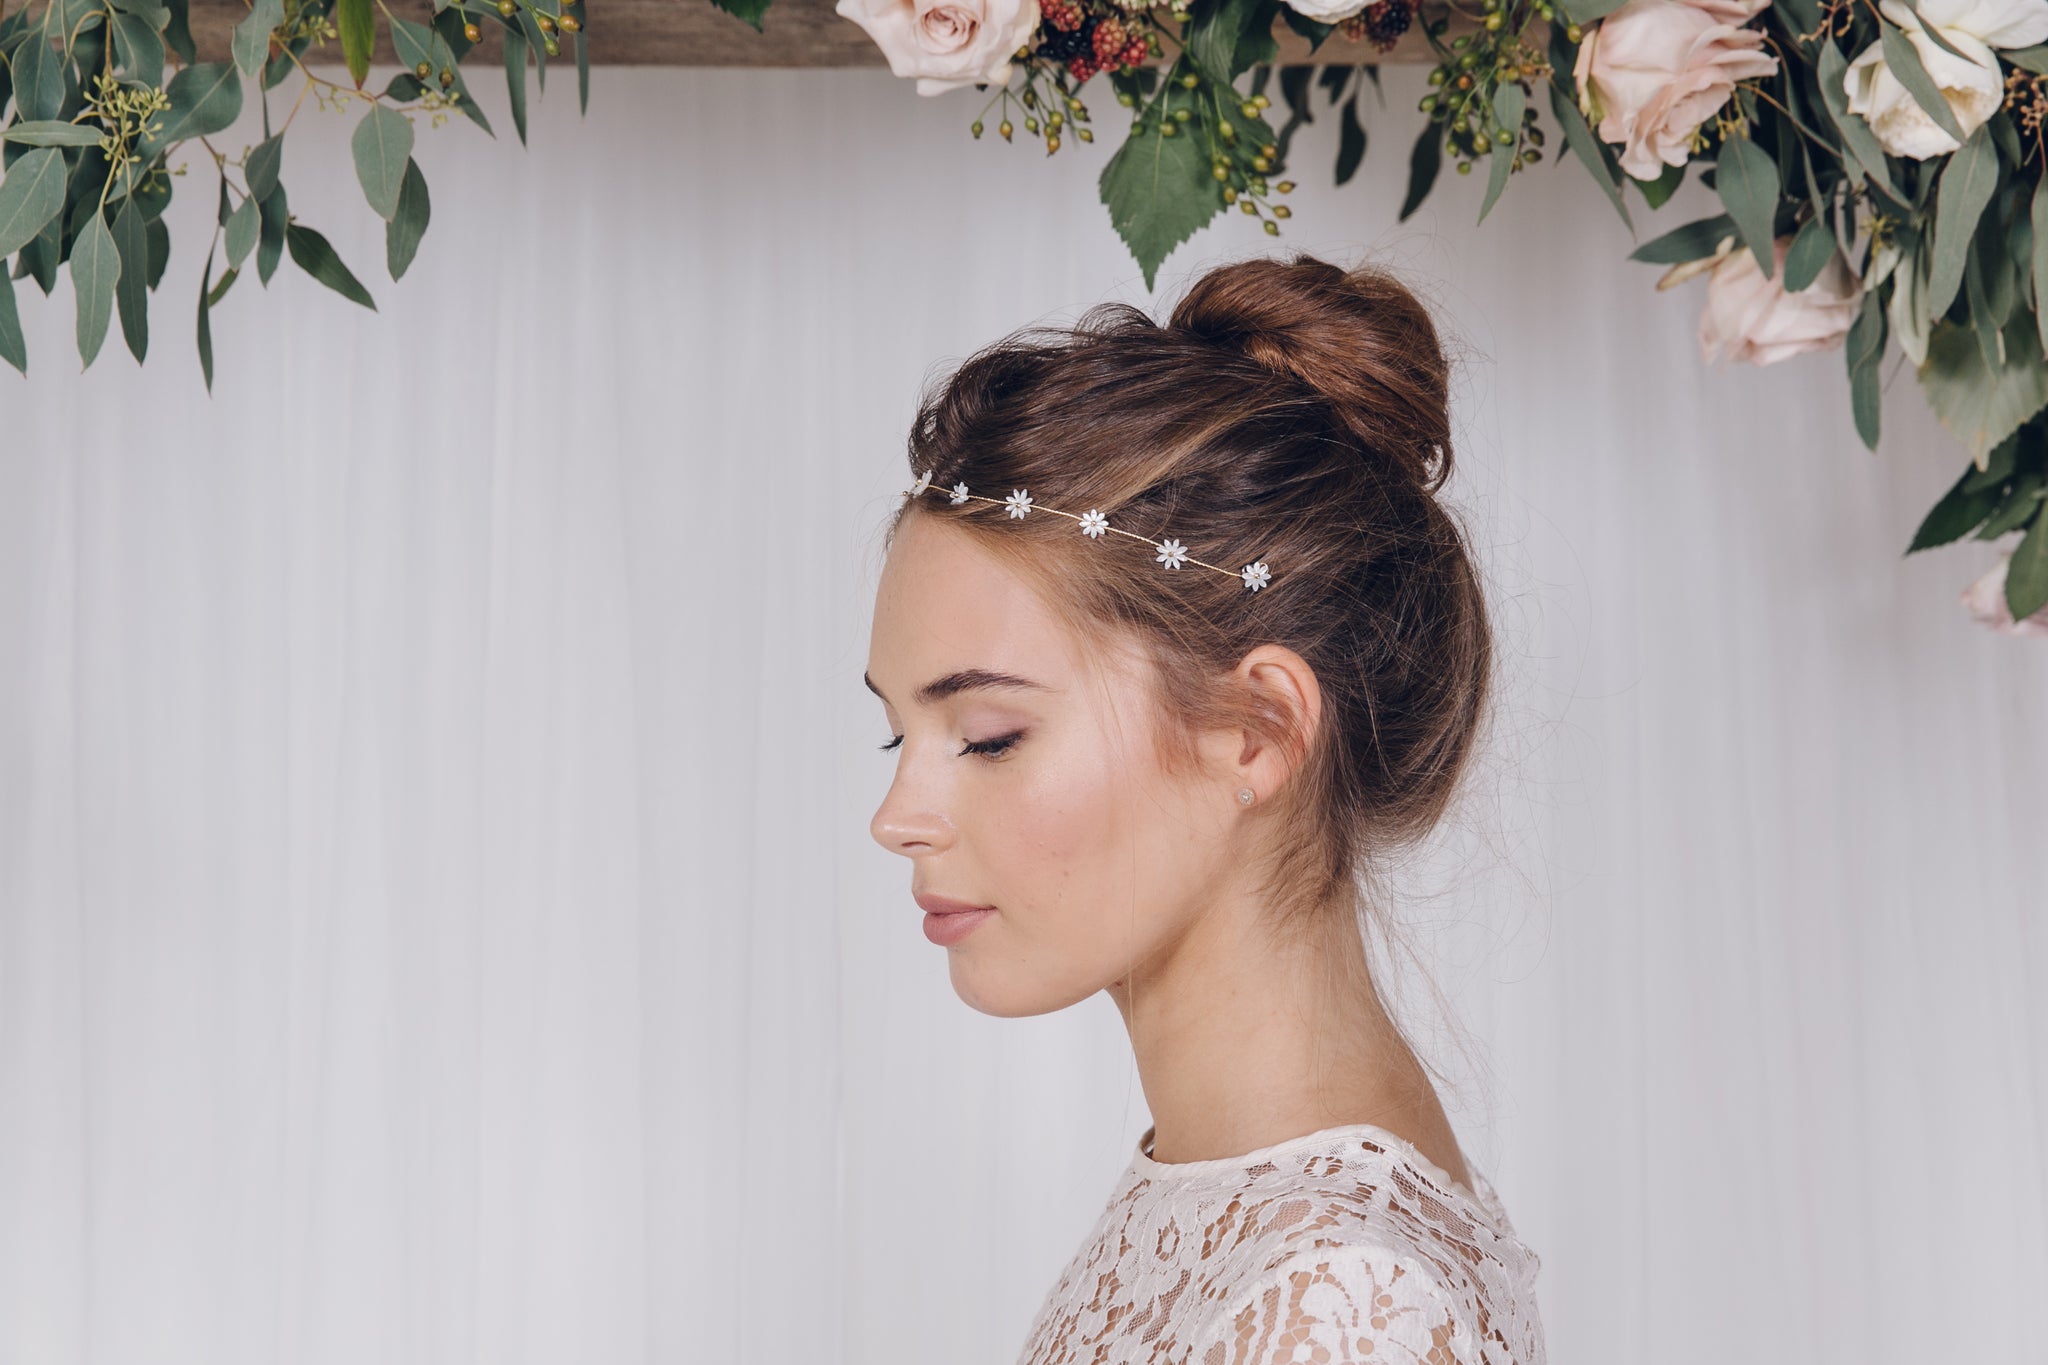 Daisy flower wedding headband with ribbon ties